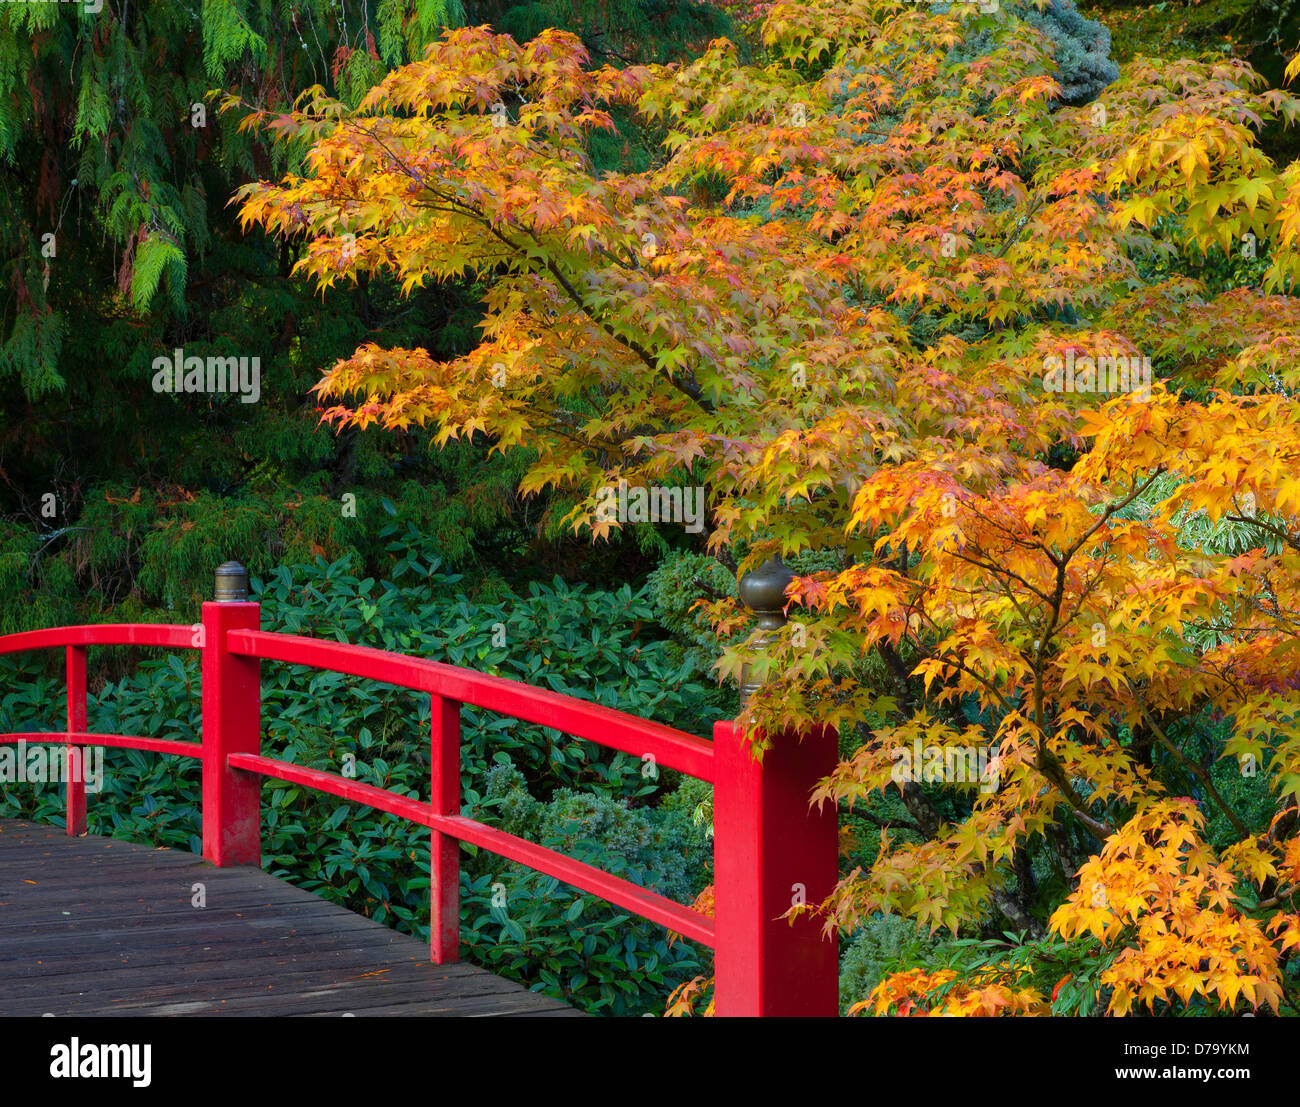 Kubota Garden Seattle Wa Heart Bridge With Fall Colored